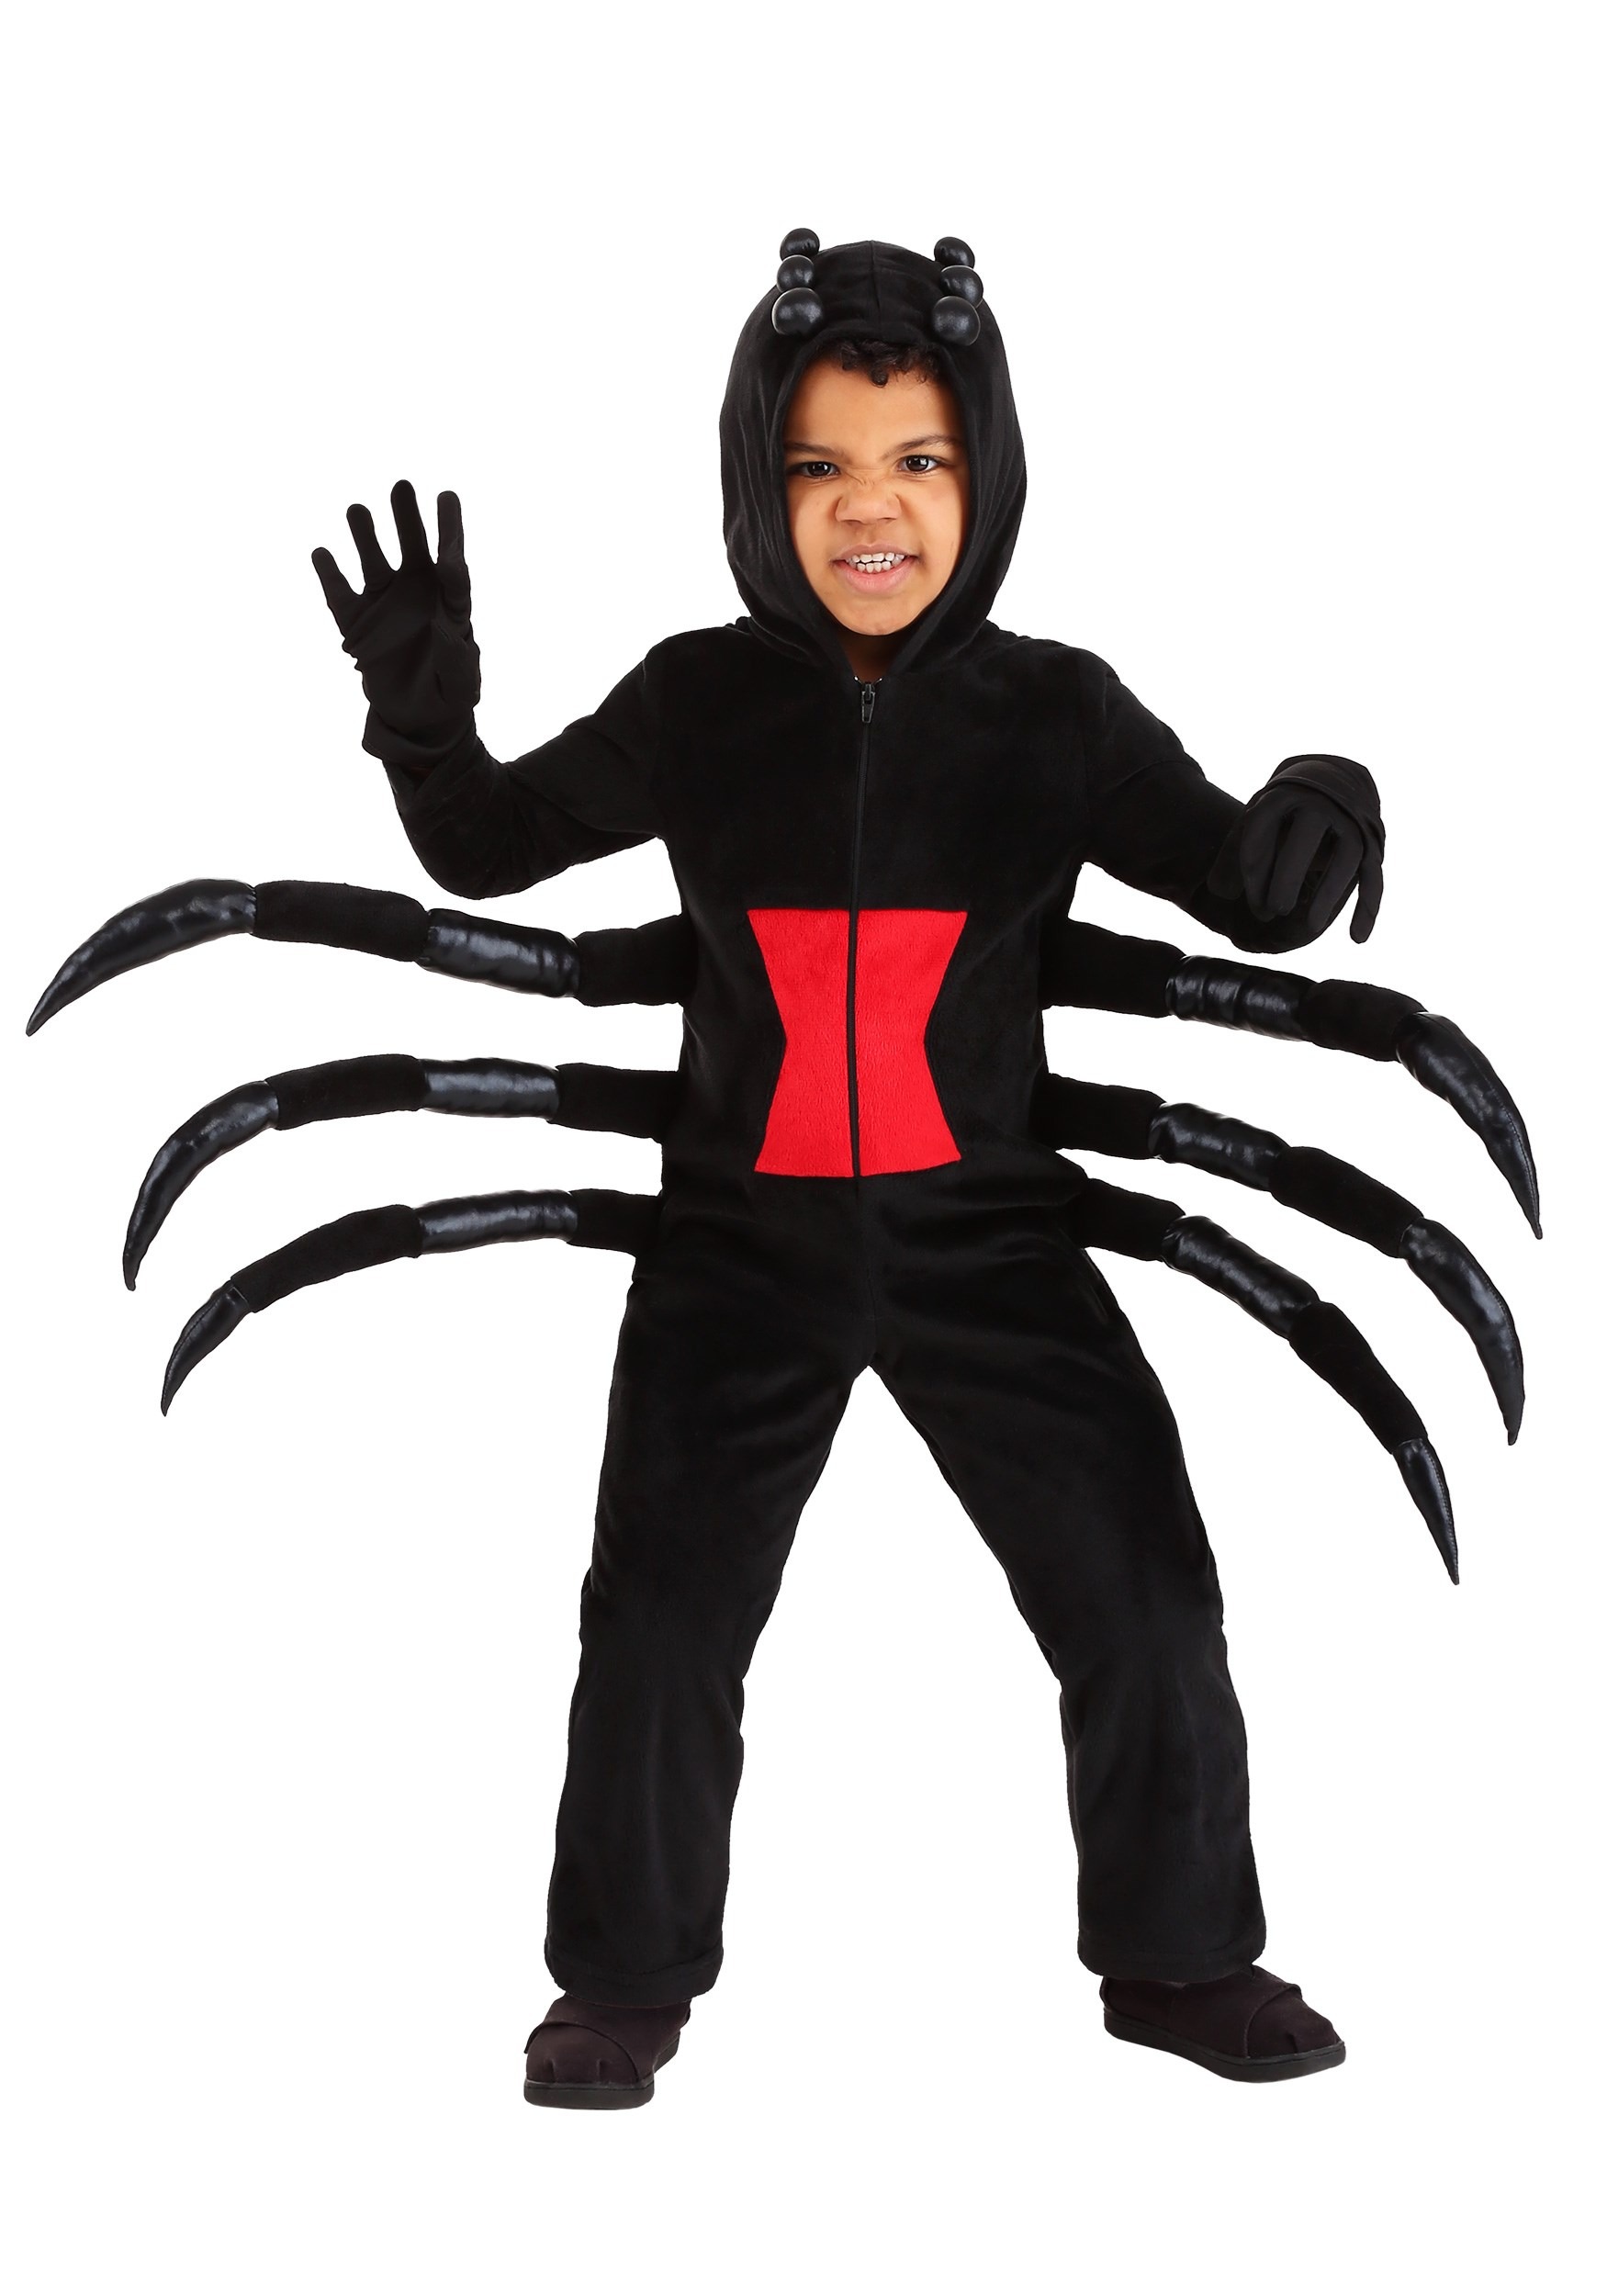 Diy Spider Costume Cheapest Wholesale, Save 64% | jlcatj.gob.mx